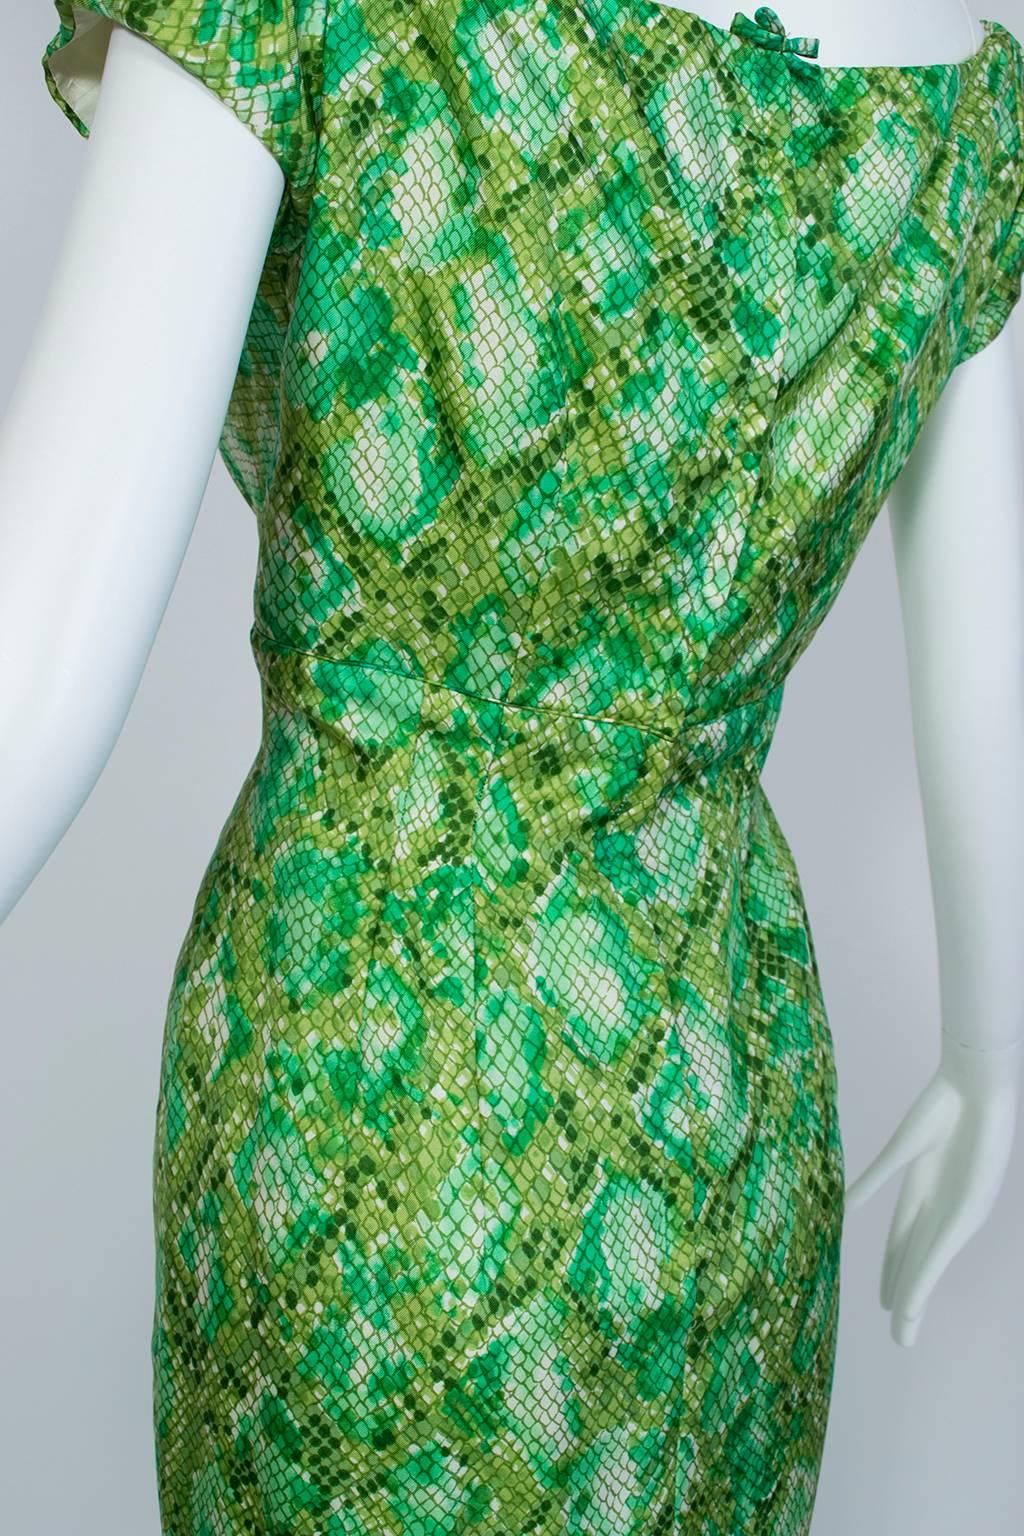 Mr Blackwell Off-Shoulder Snake Print Cocktail Dress and Wrap, 1960s 2